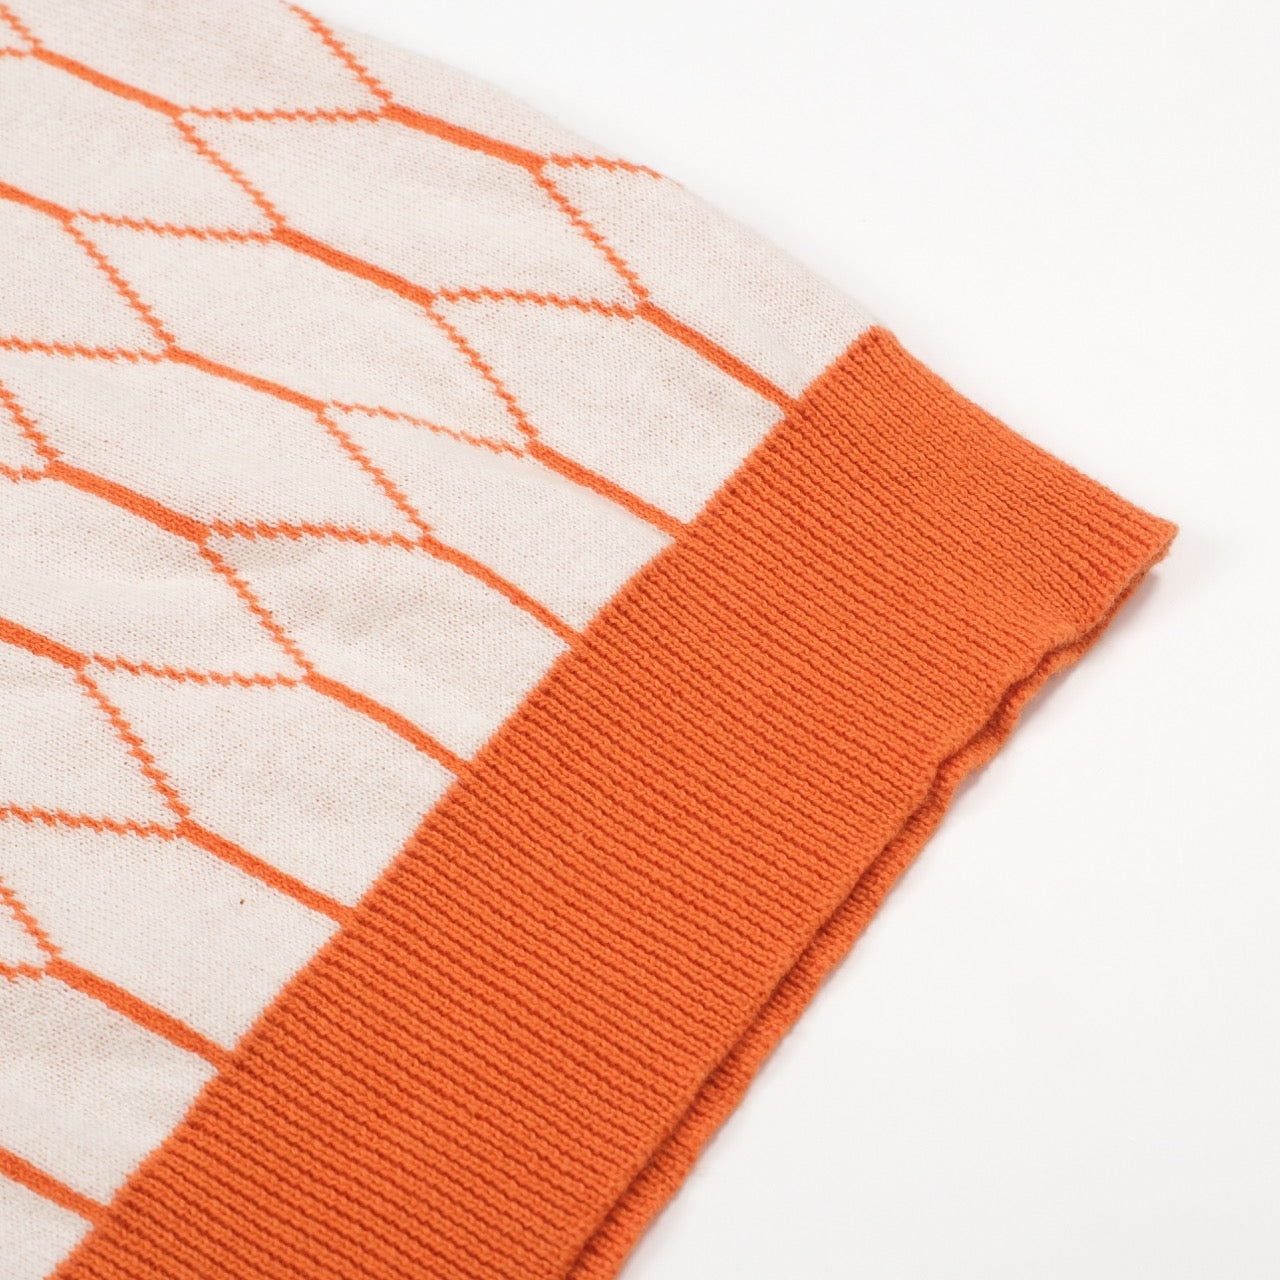 Men's Orange Knitted Wear With Geometric Pattern Long Sleeves Knit Fashion